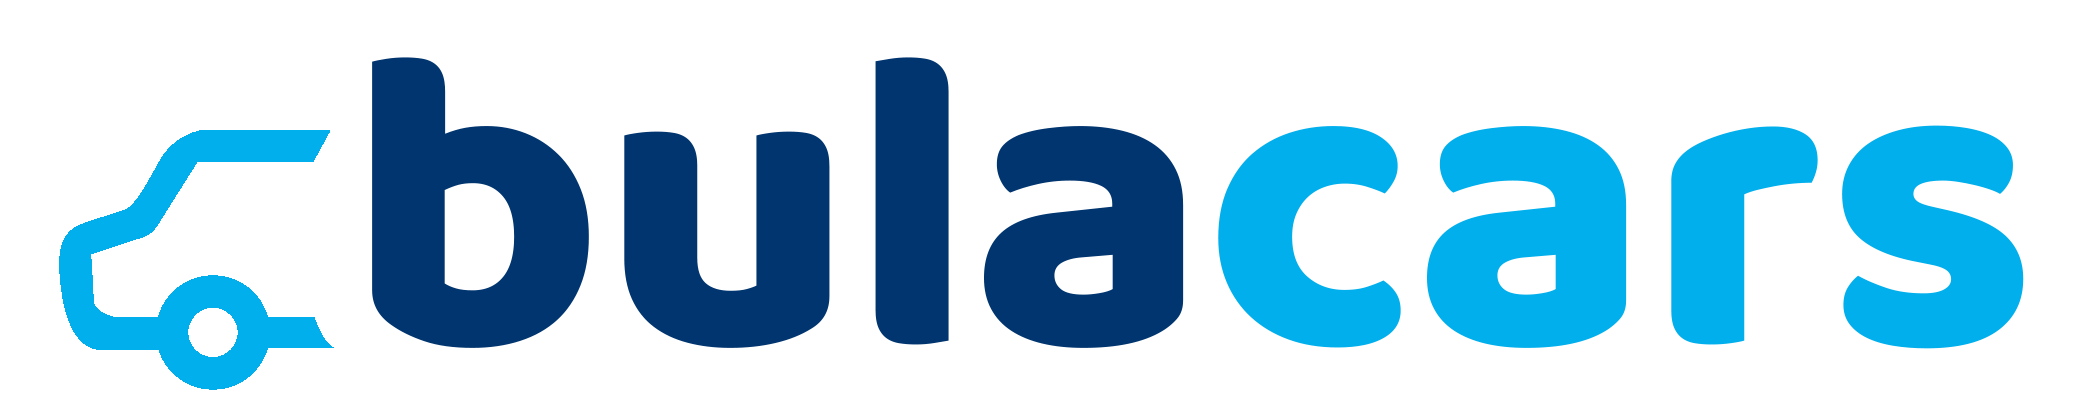 Bulacars logo